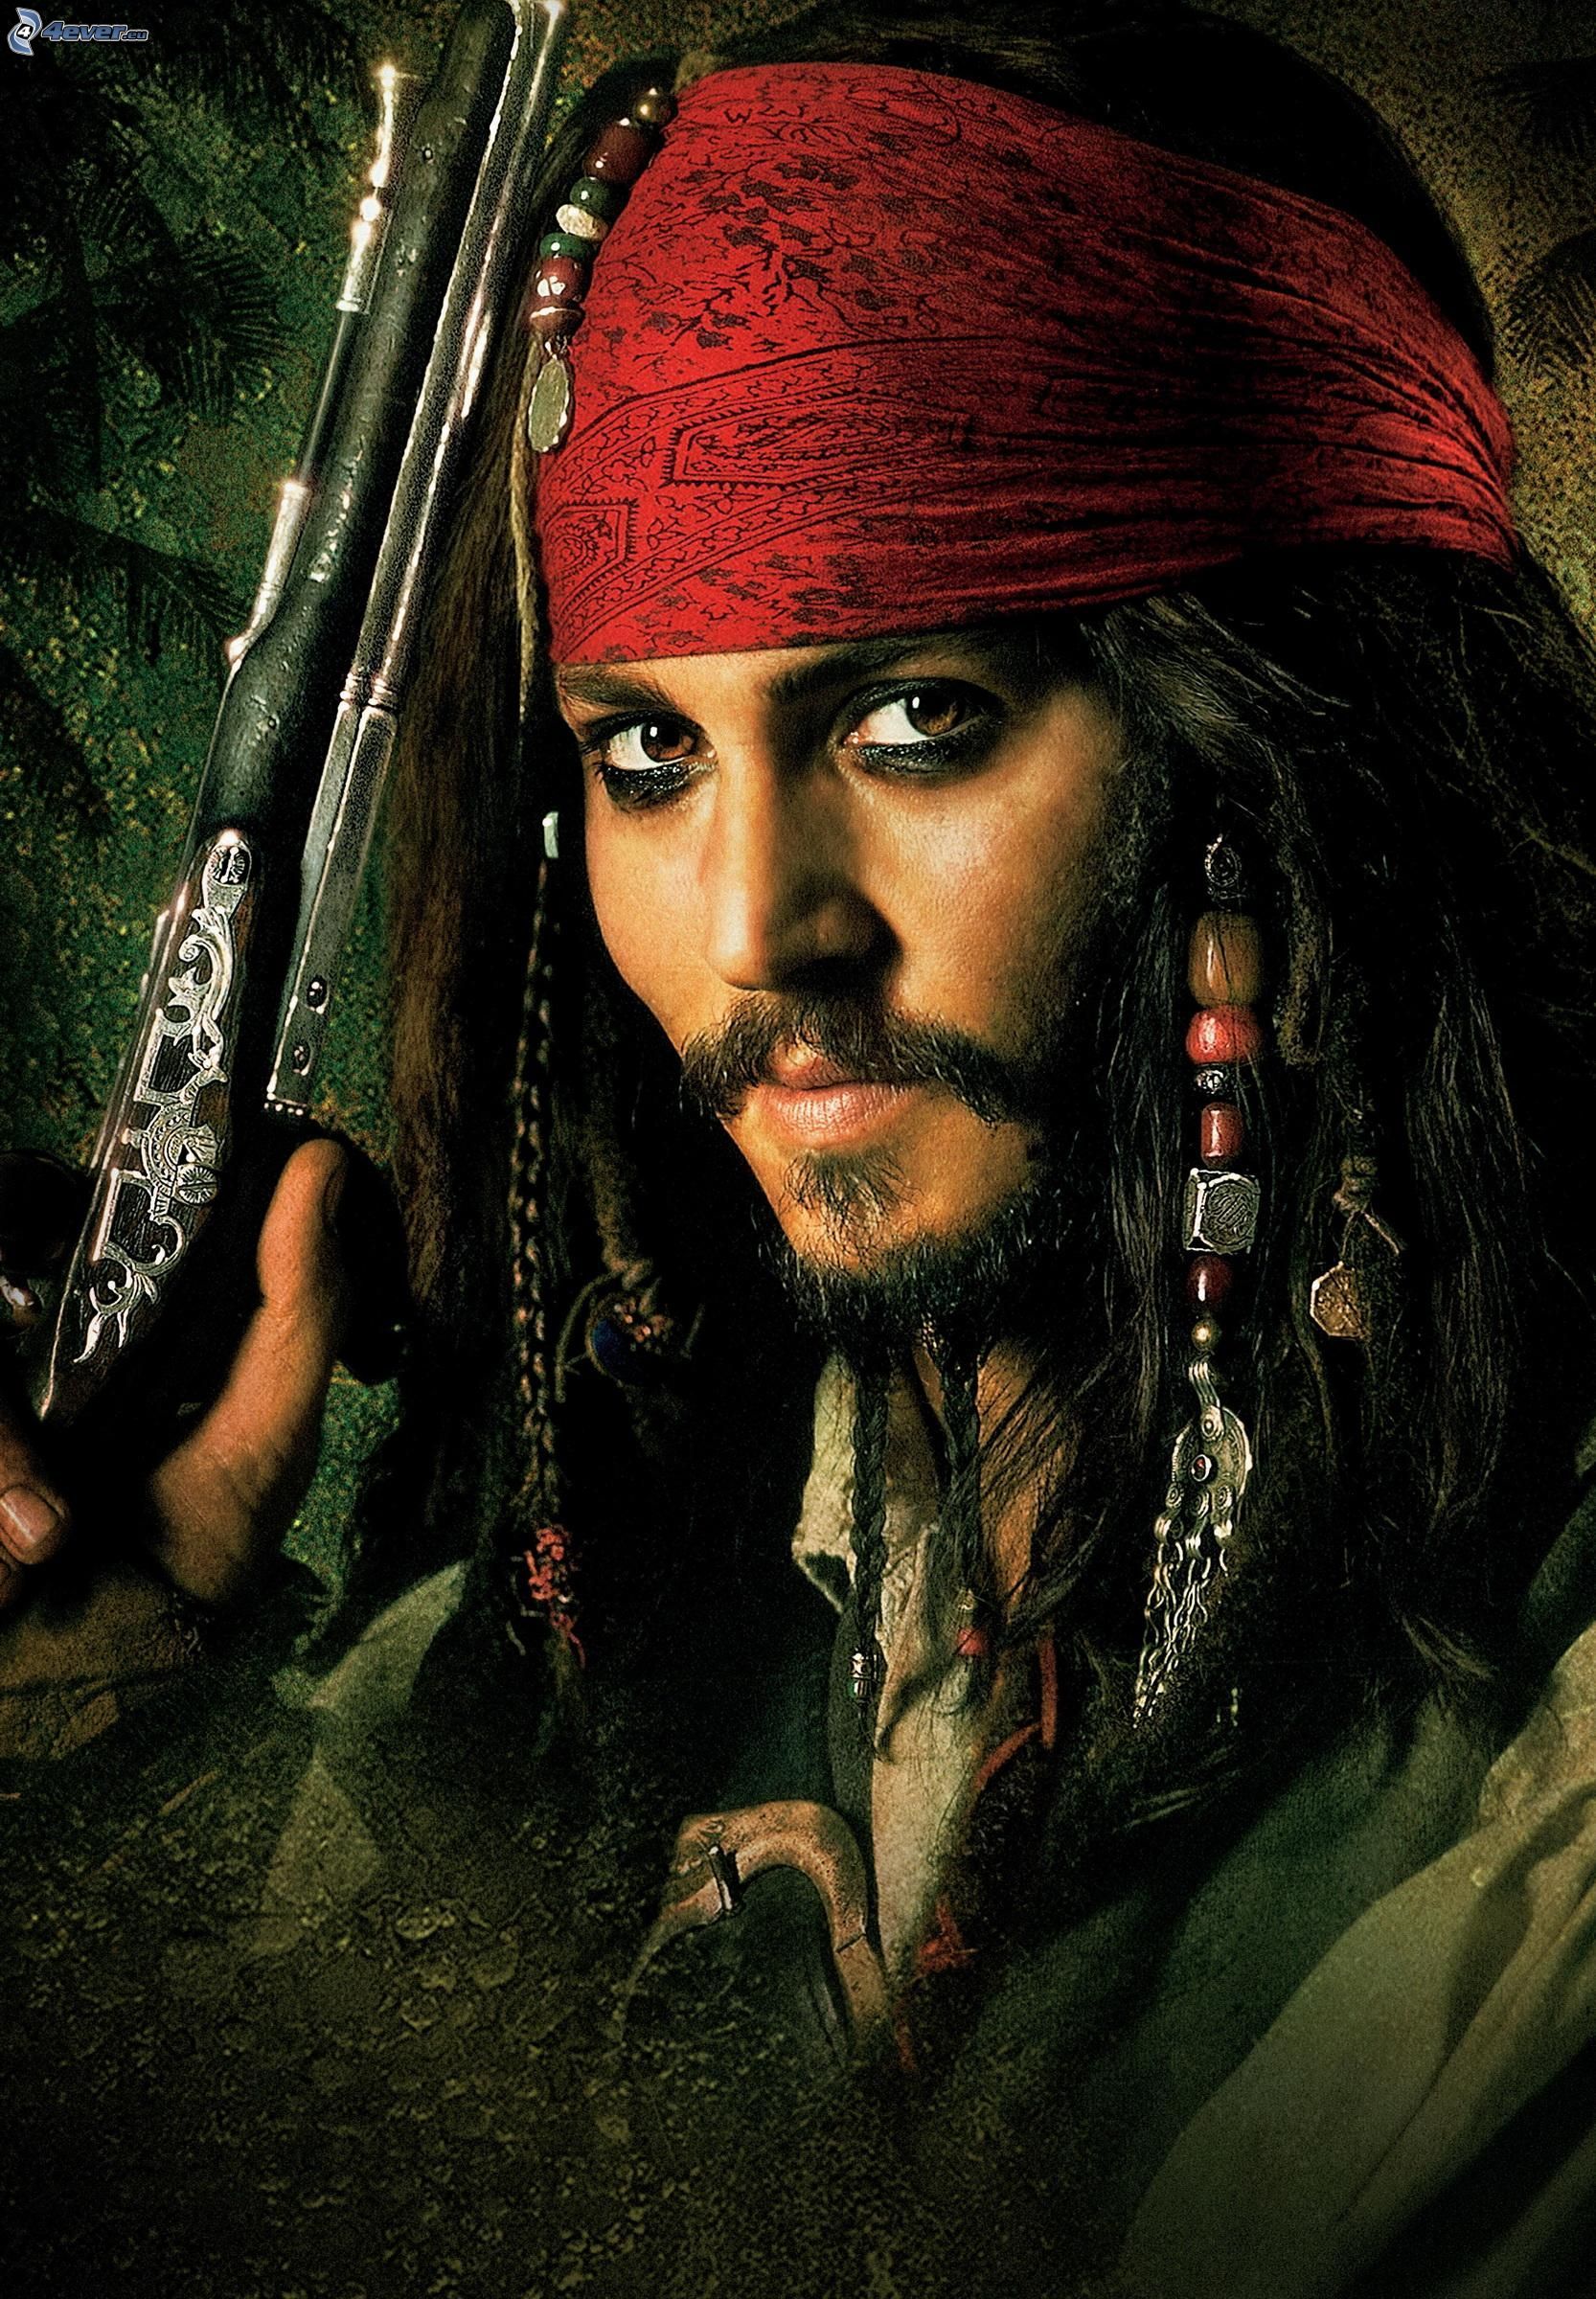 pirates 2005 full hd movie download